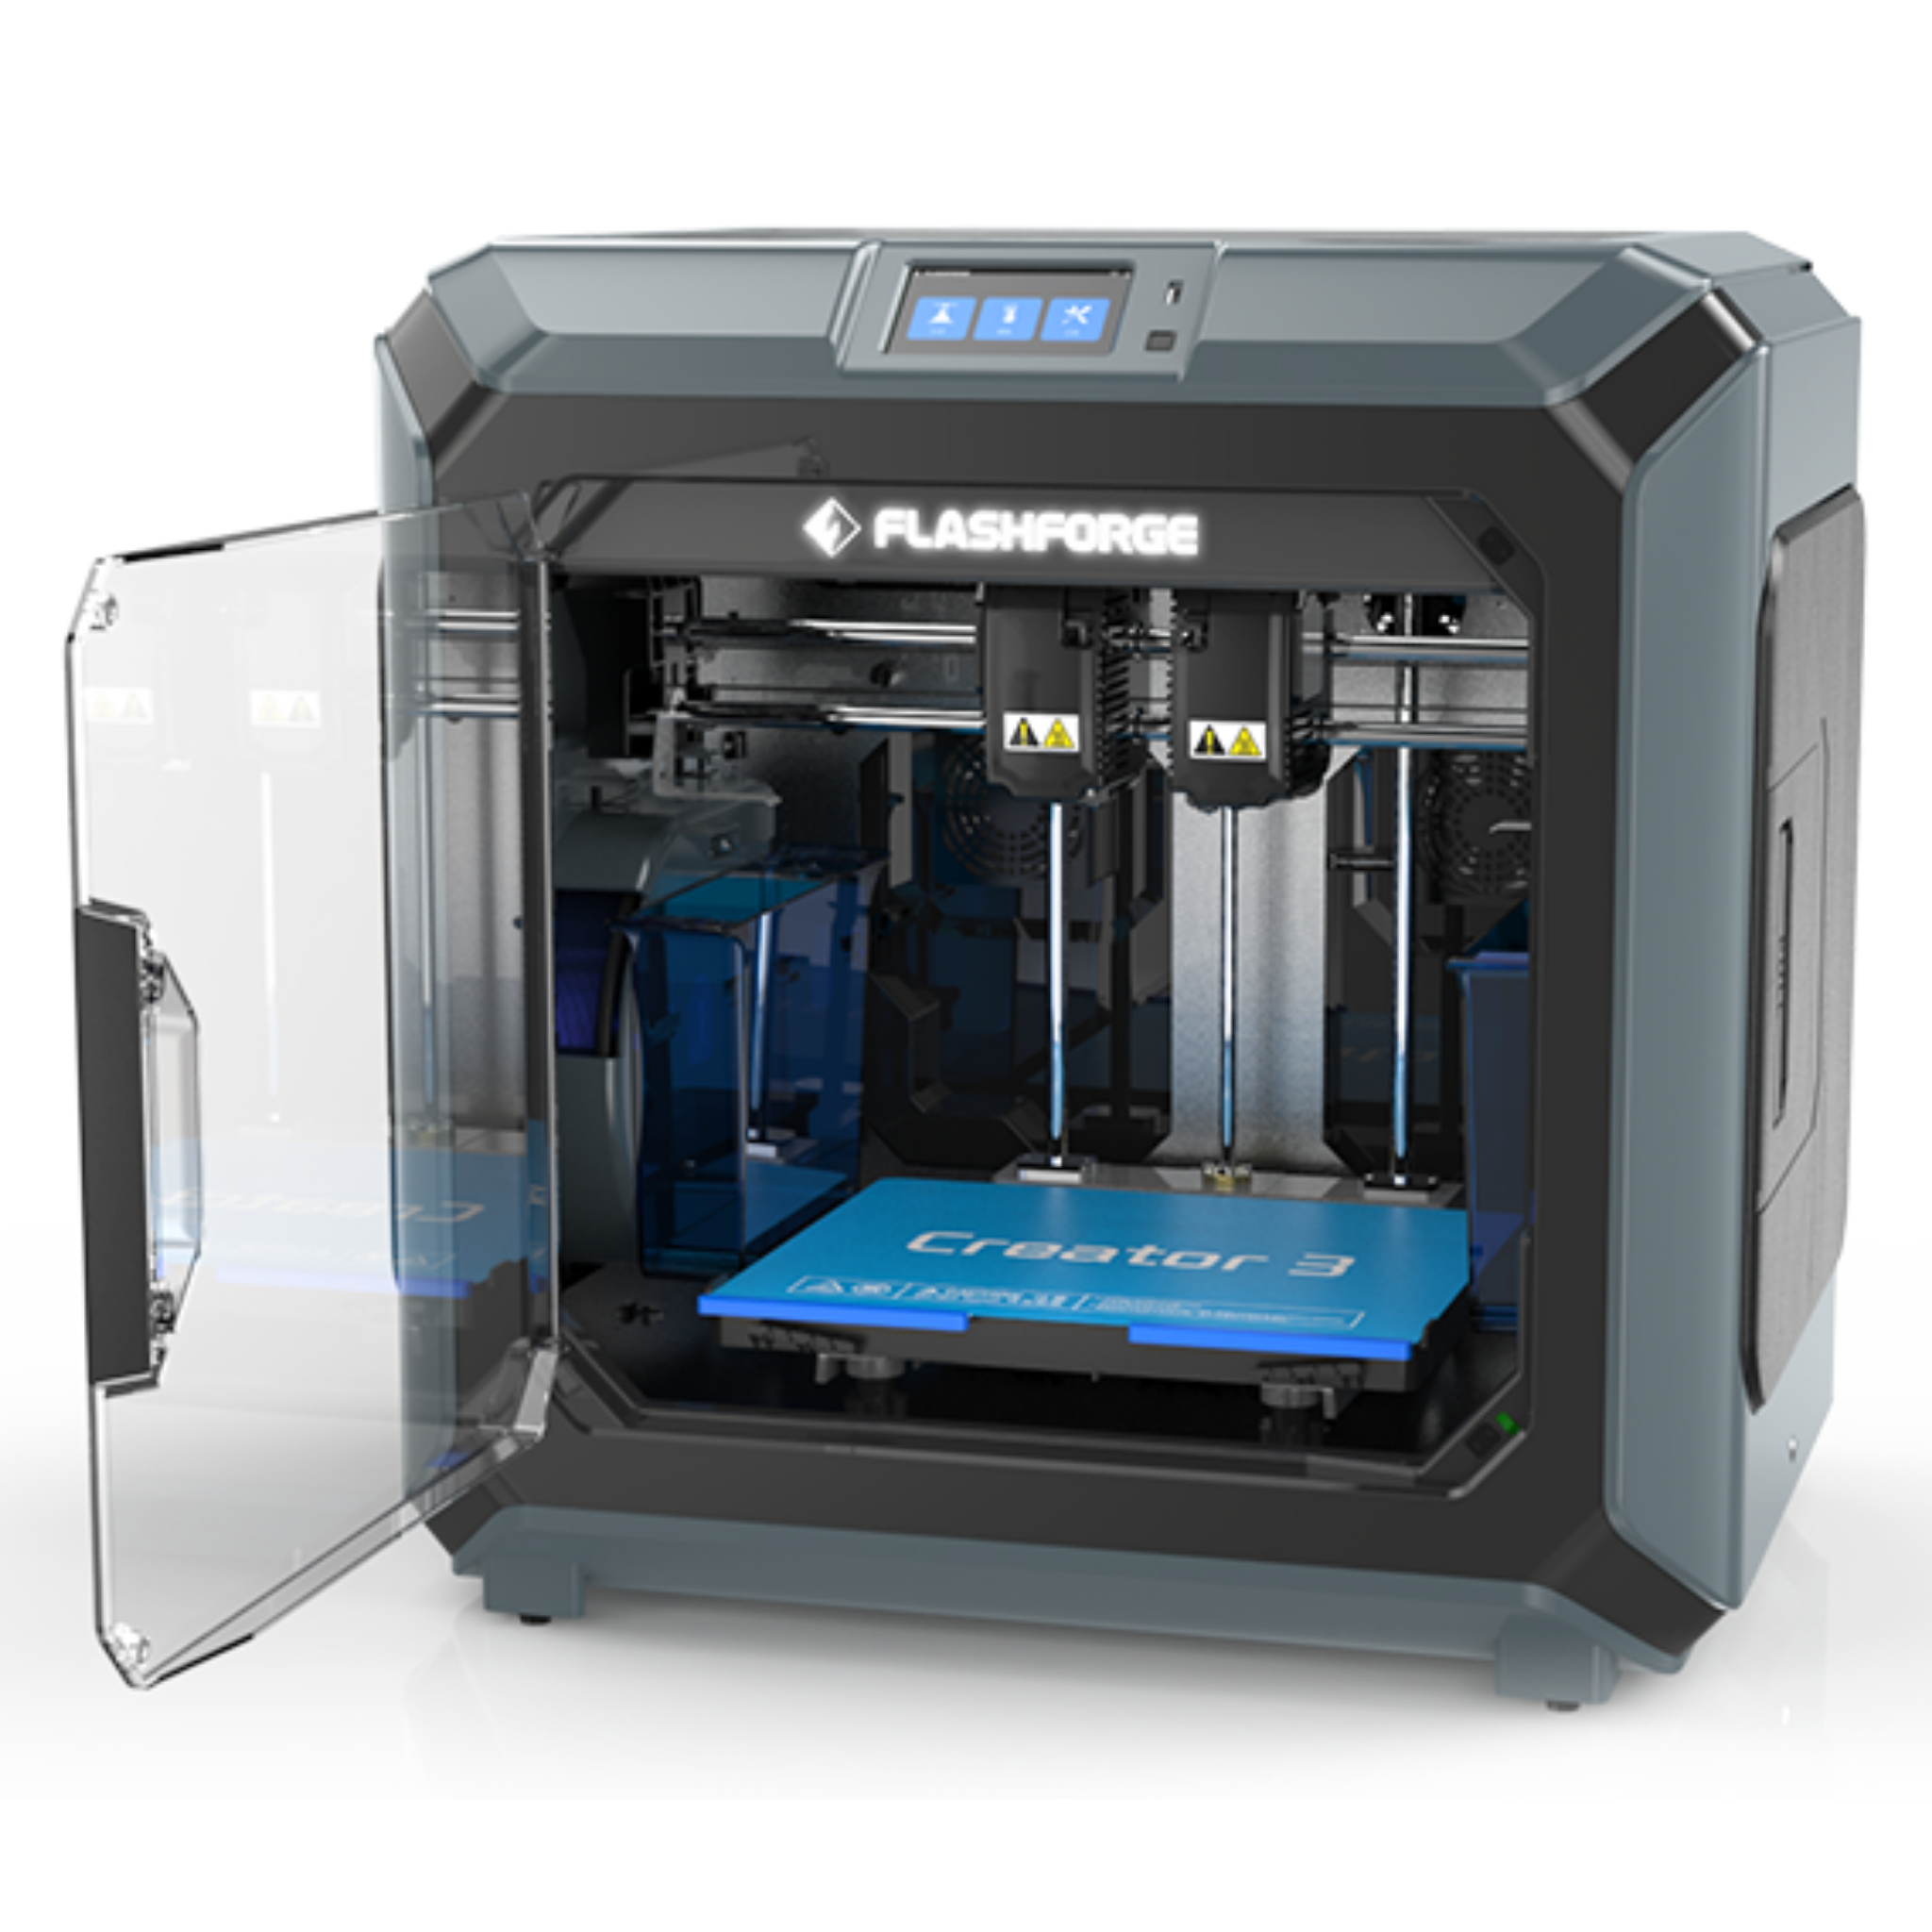 FlashForge Pro 3D Printer